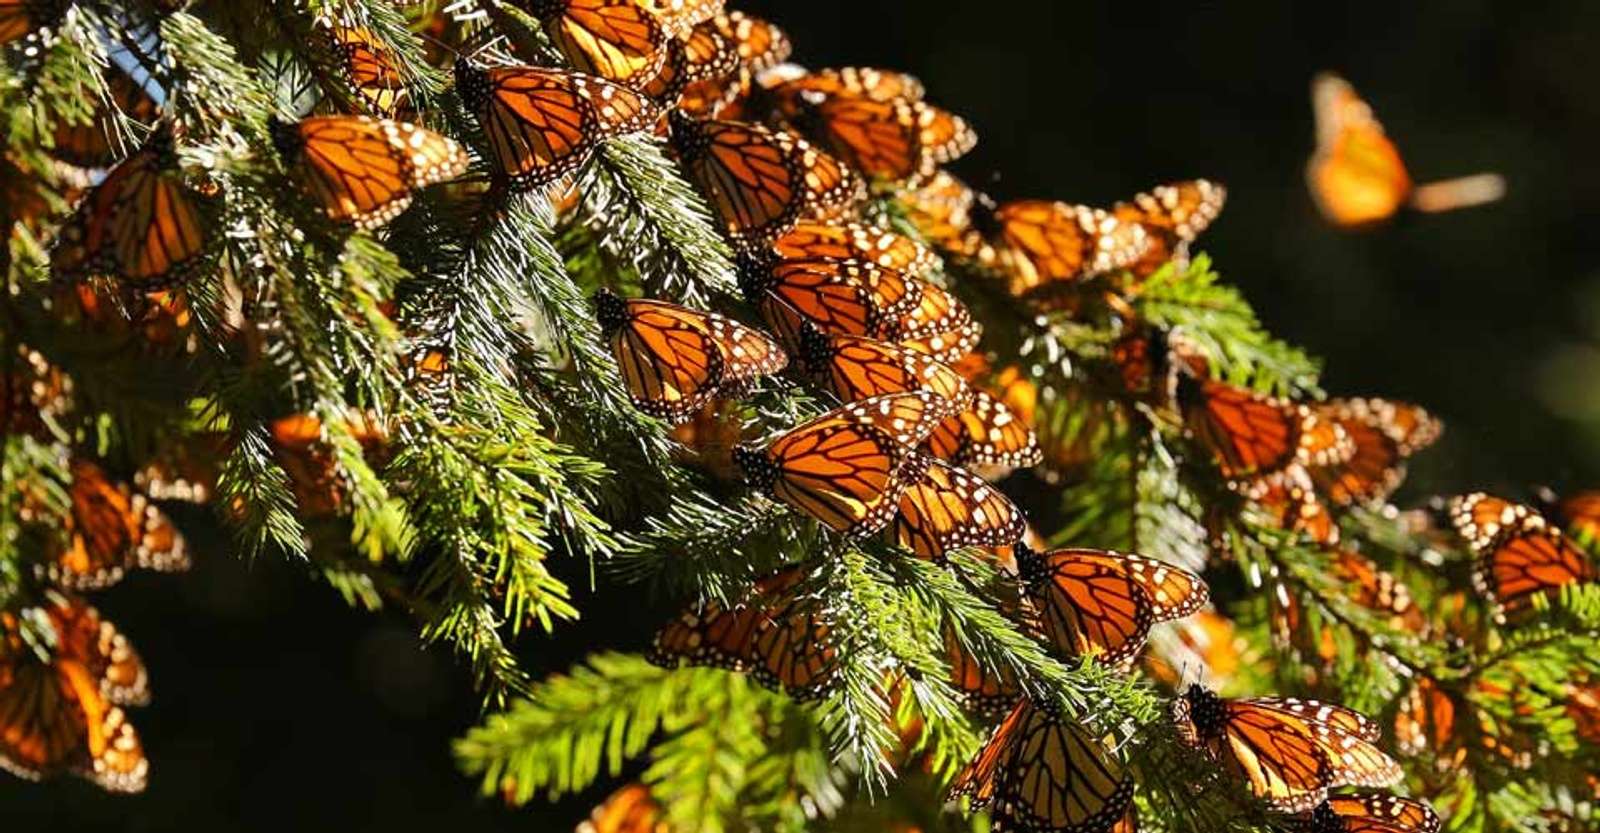 Monarch butterflies on fir tree, El Rosario Butterfly Sanctuary, Mexico.